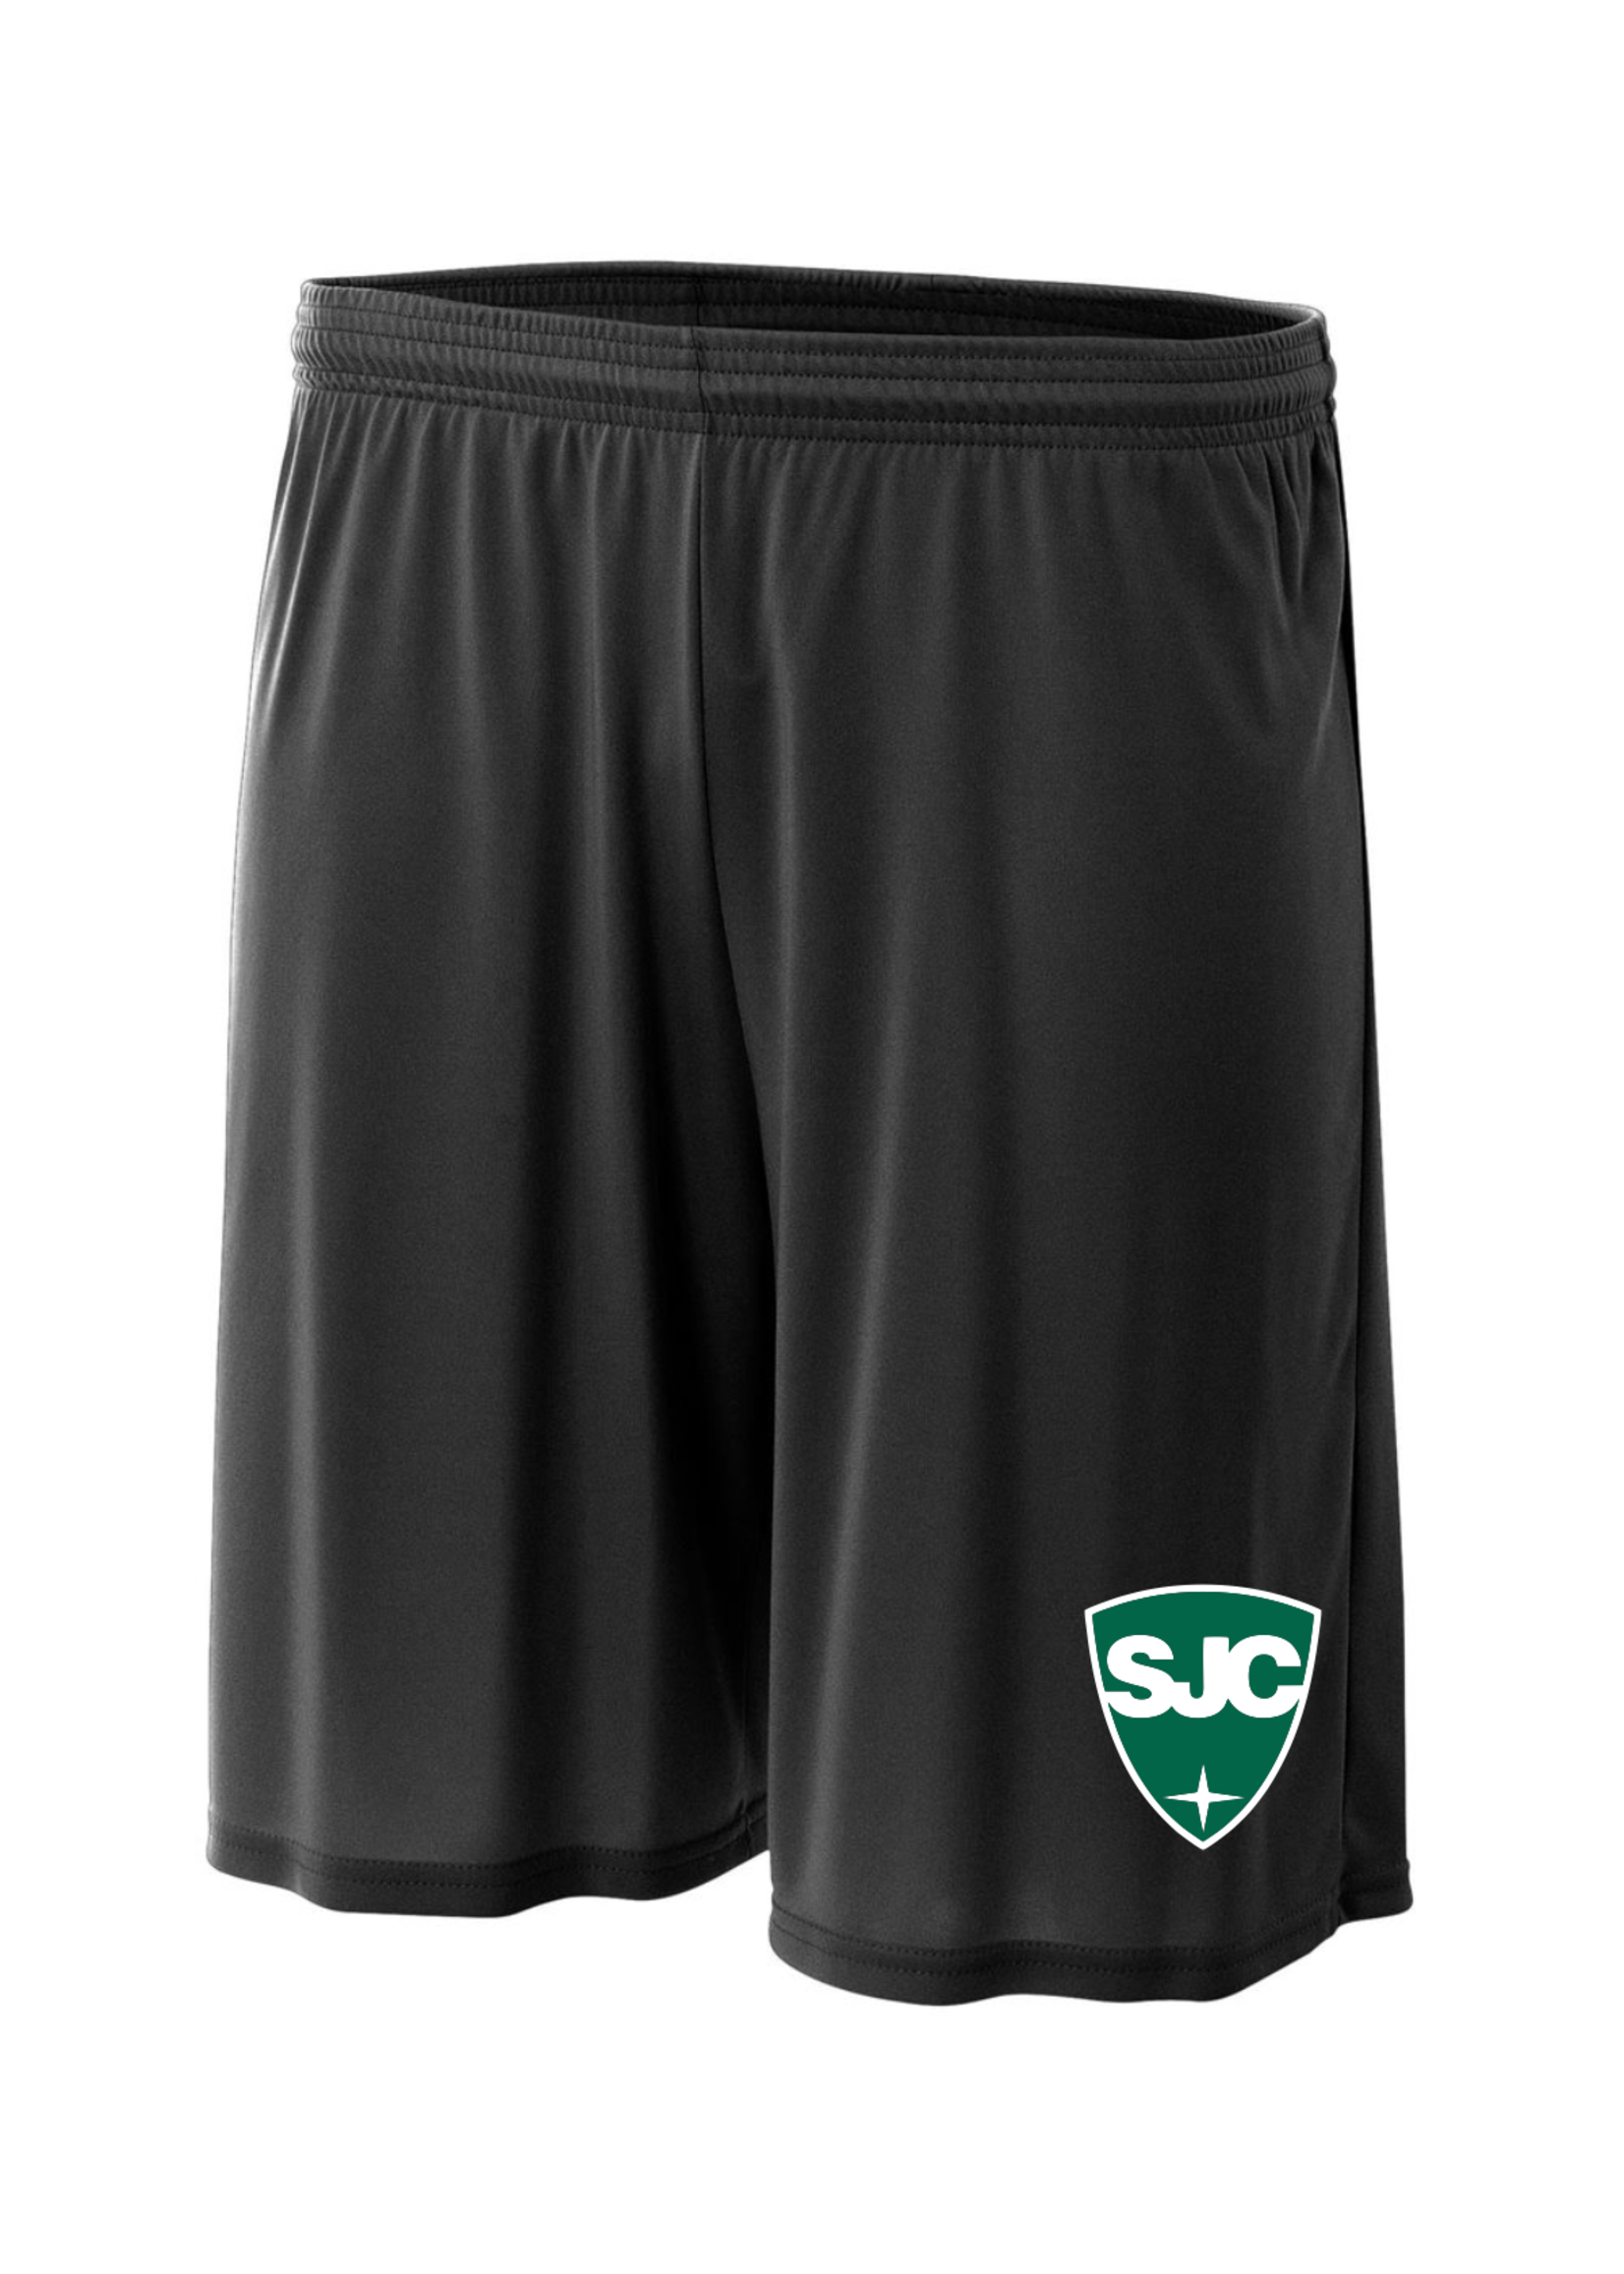 SJC Black Shorts for sports uniforms